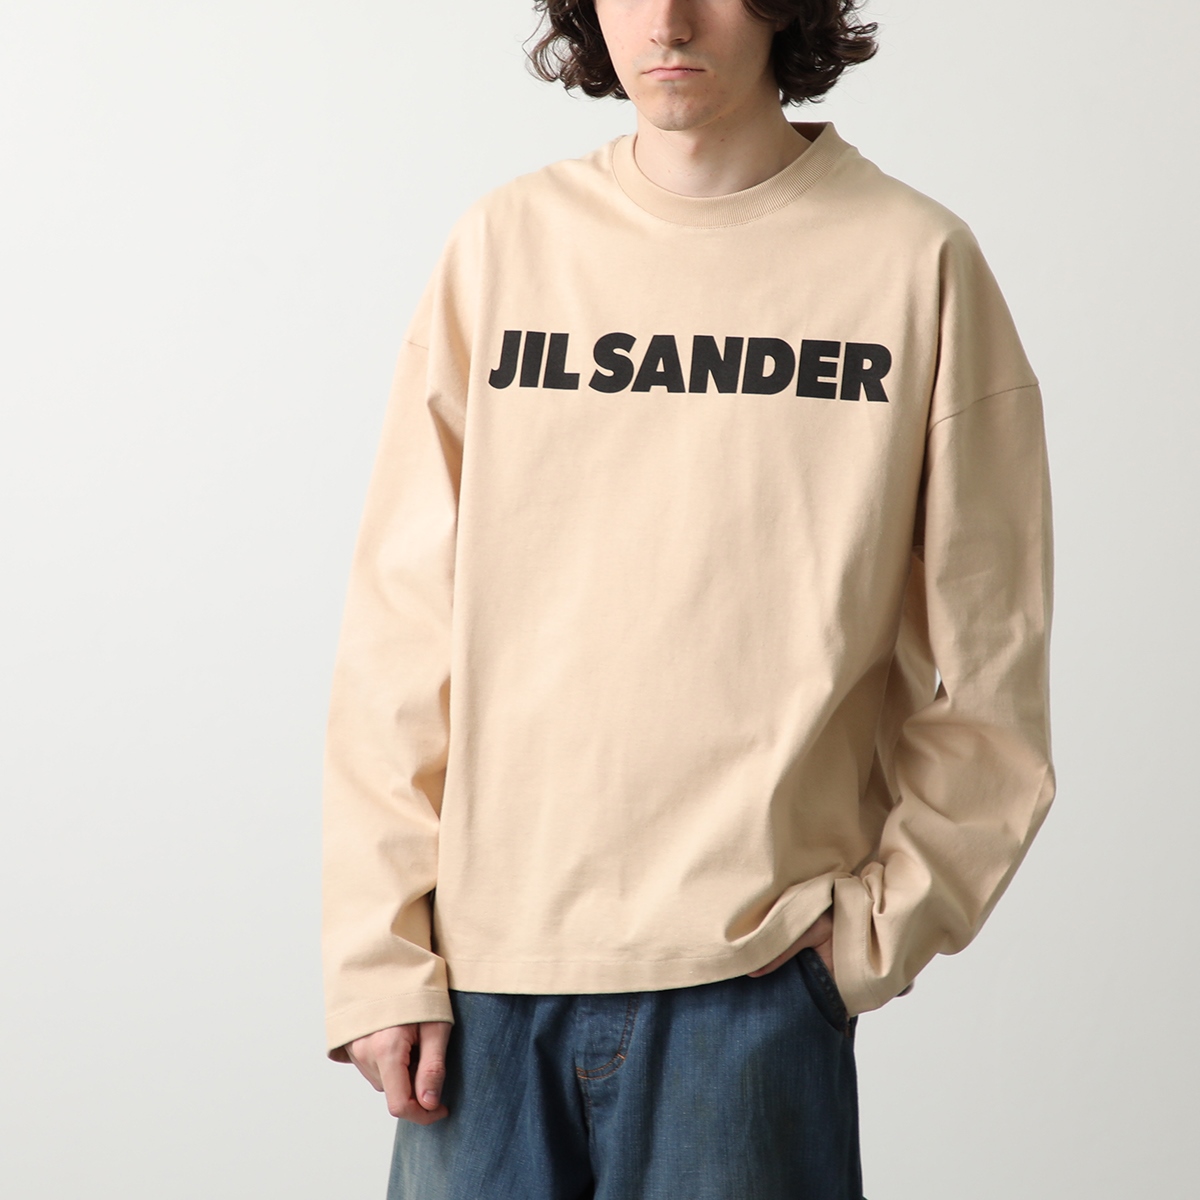 JIL SANDER ジルサンダー Tシャツ J22GC0136 J20215 メンズ 長袖 ロンT ロゴT コットン クルーネック カラー2色